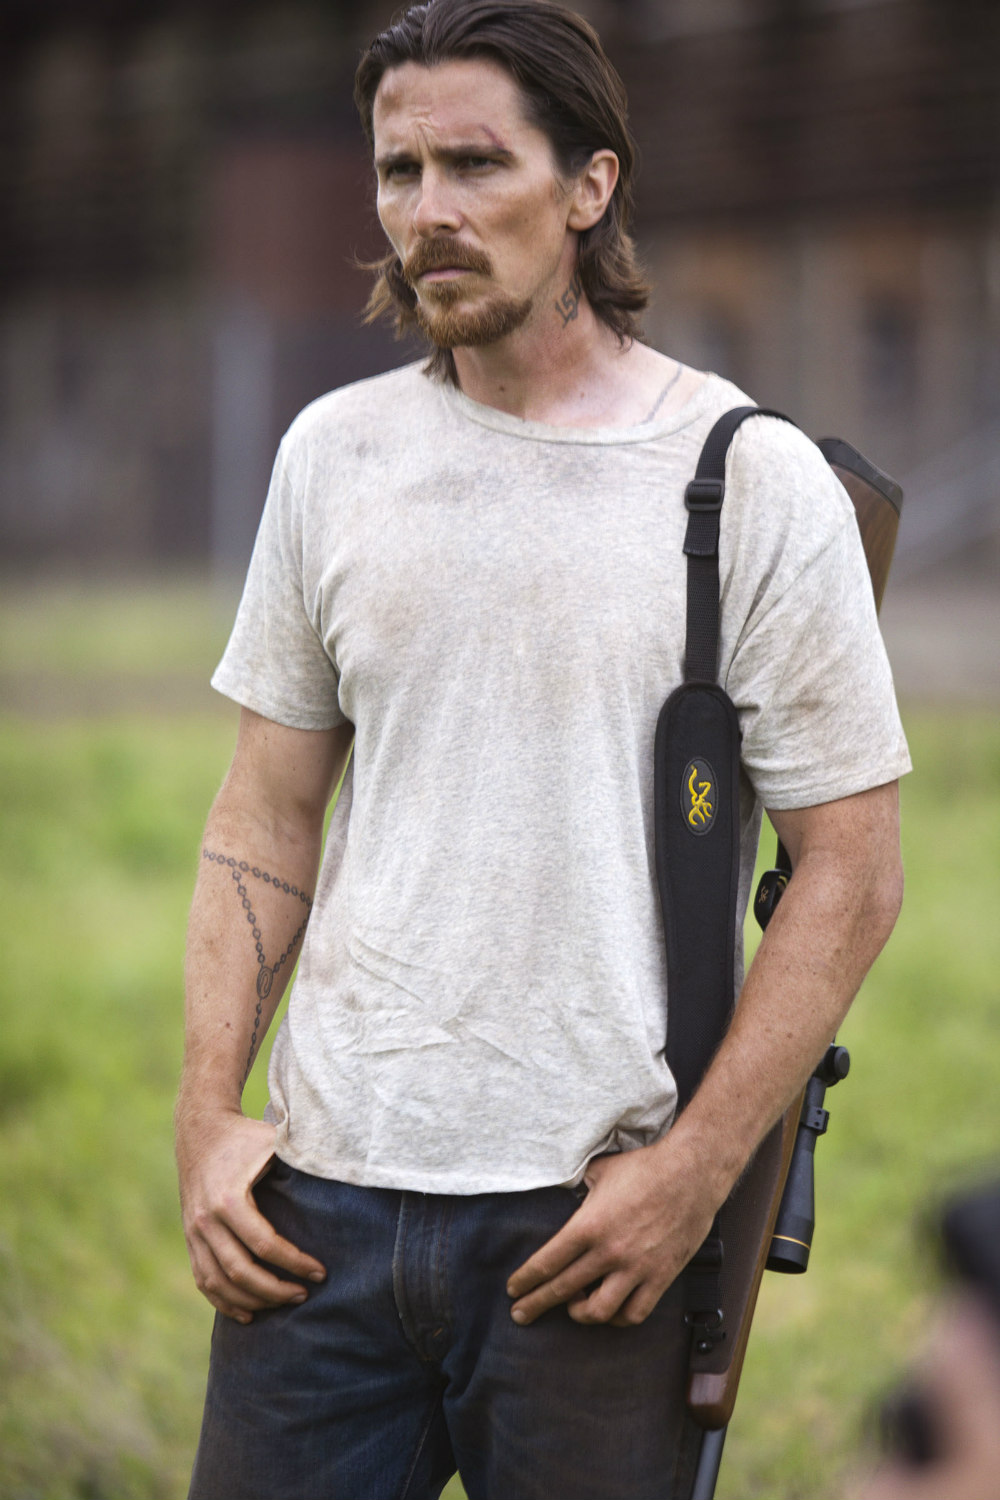 Кристиан Бэйл Christian Bale Out of the Furnace weight  Из пекла вес